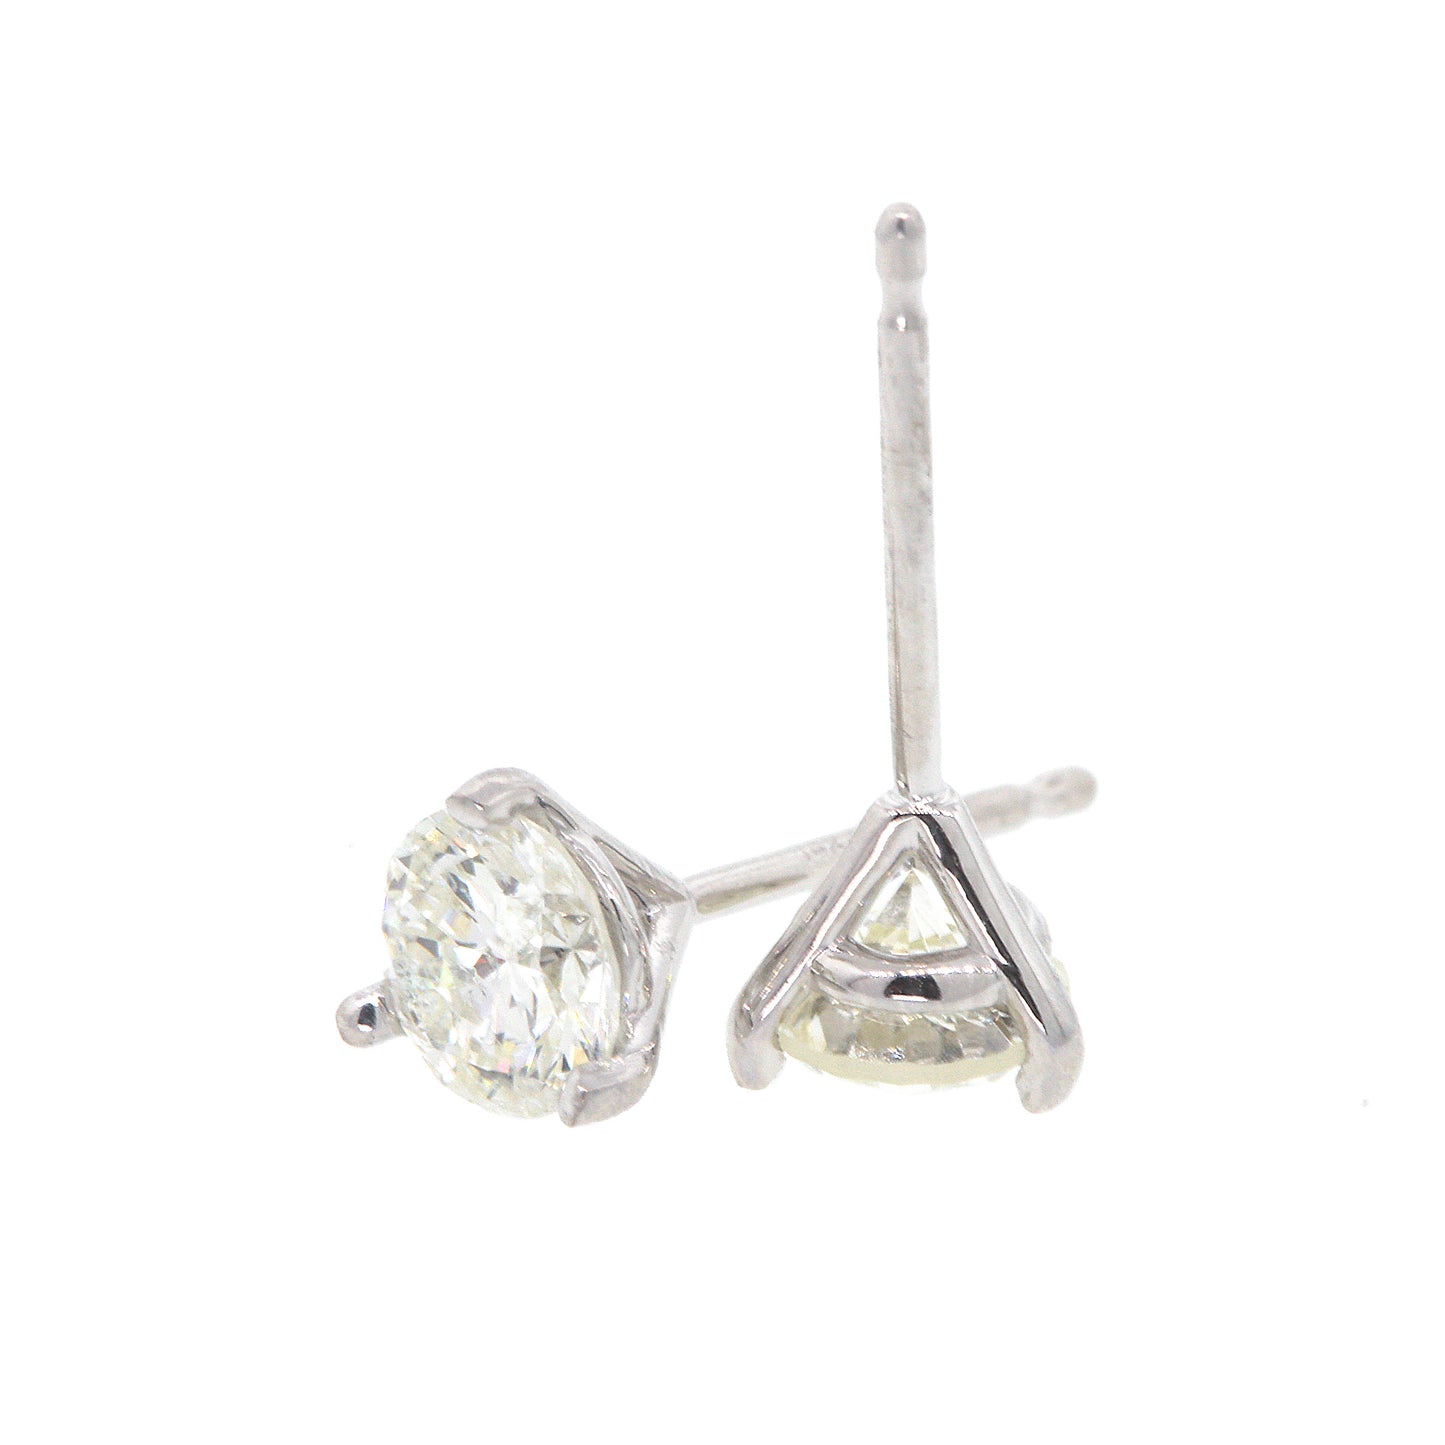 Classic White Gold Diamond Studs Earrings